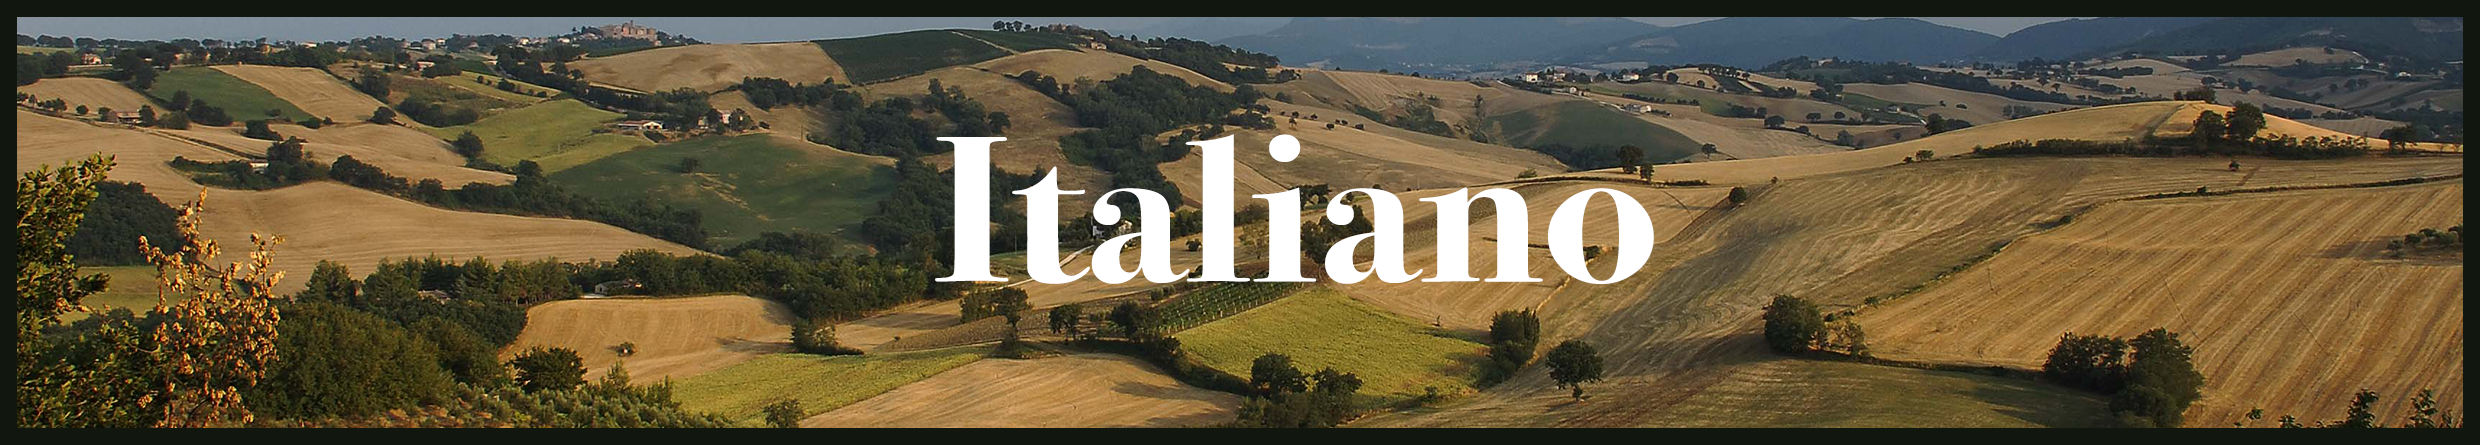 italian banner 